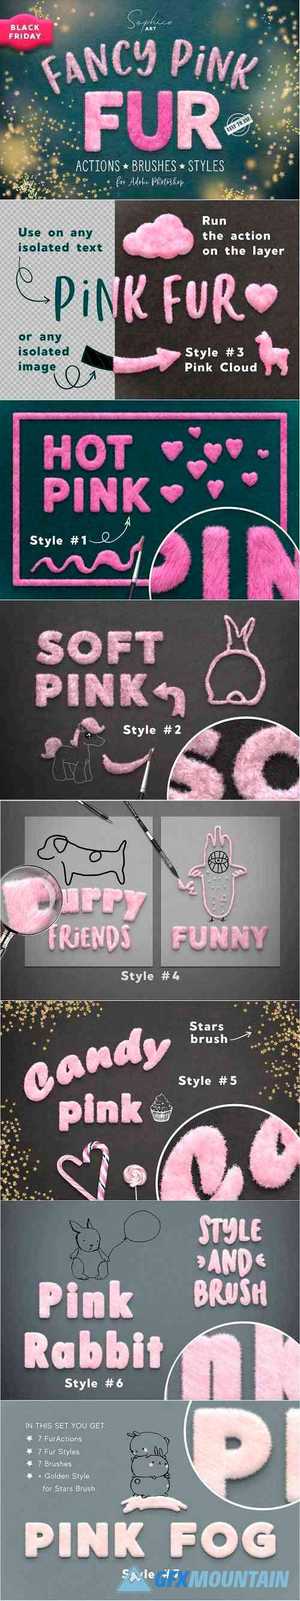 Fanсy Pink Fur Photoshop Effect 5611085